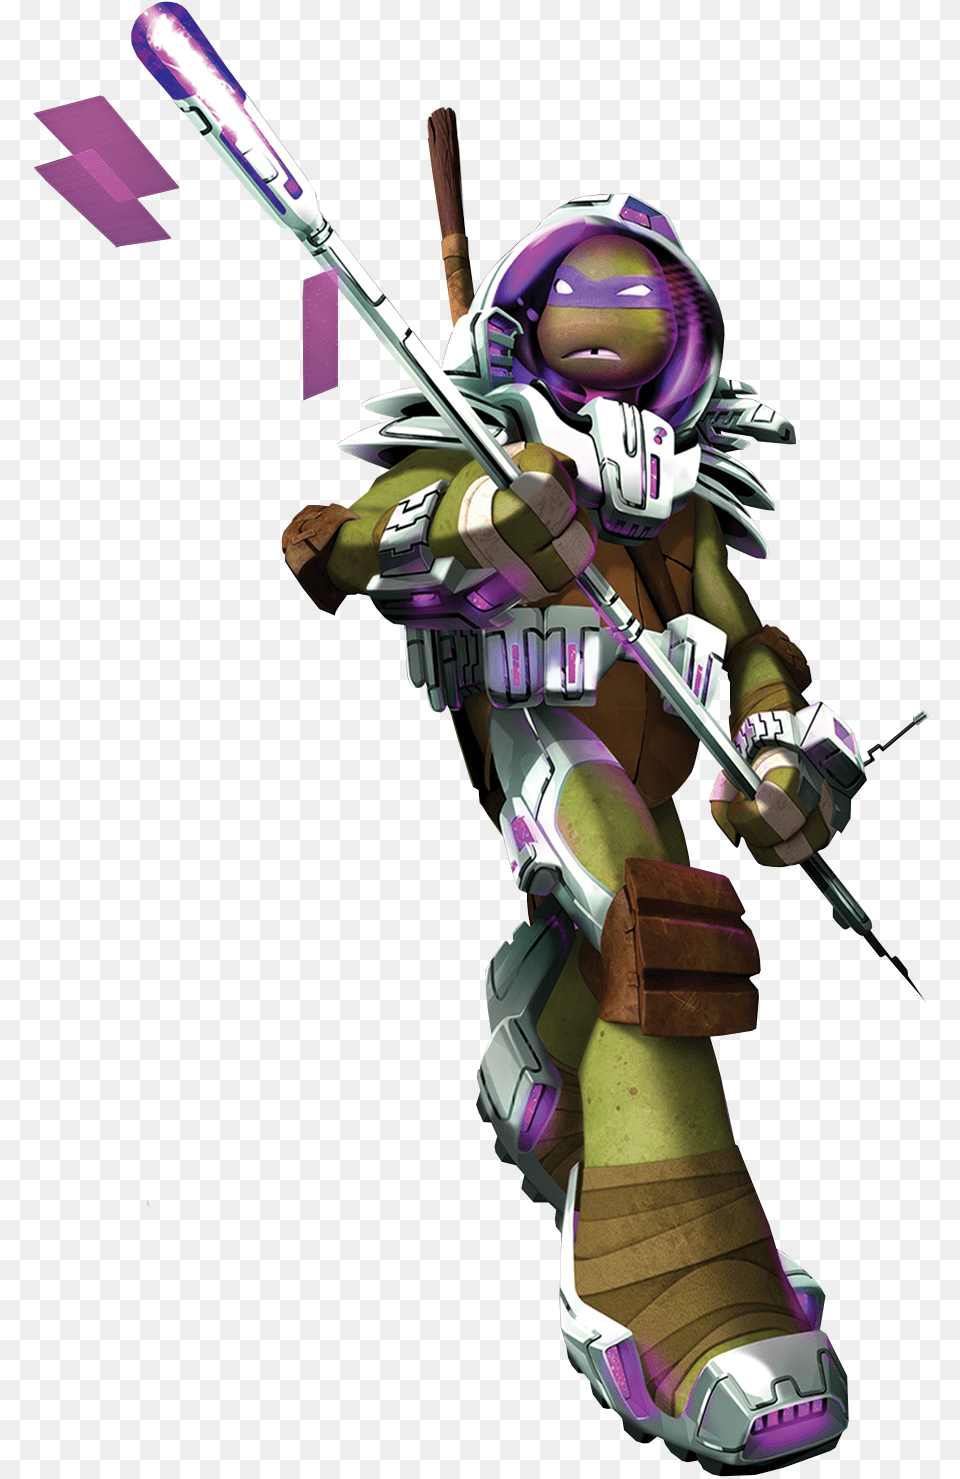 Dimension X Donatello Render Teenage Mutant Ninja Turtles, People, Person, Baby, Toy Png Image